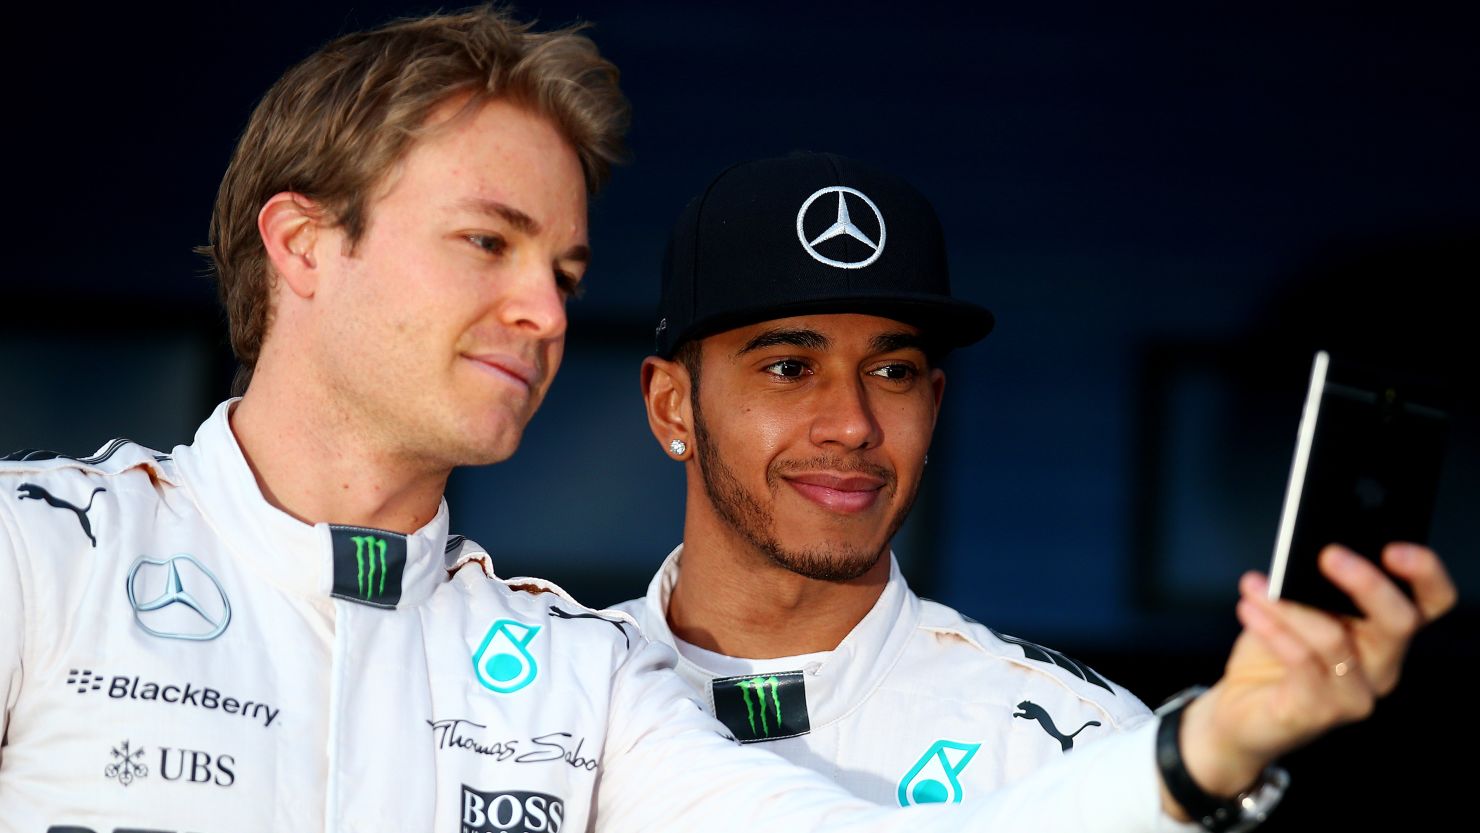 Mercedes' teammates Nico Rosberg (L) and Lewis Hamilton will renew their rivalry in the 2015 F1 season